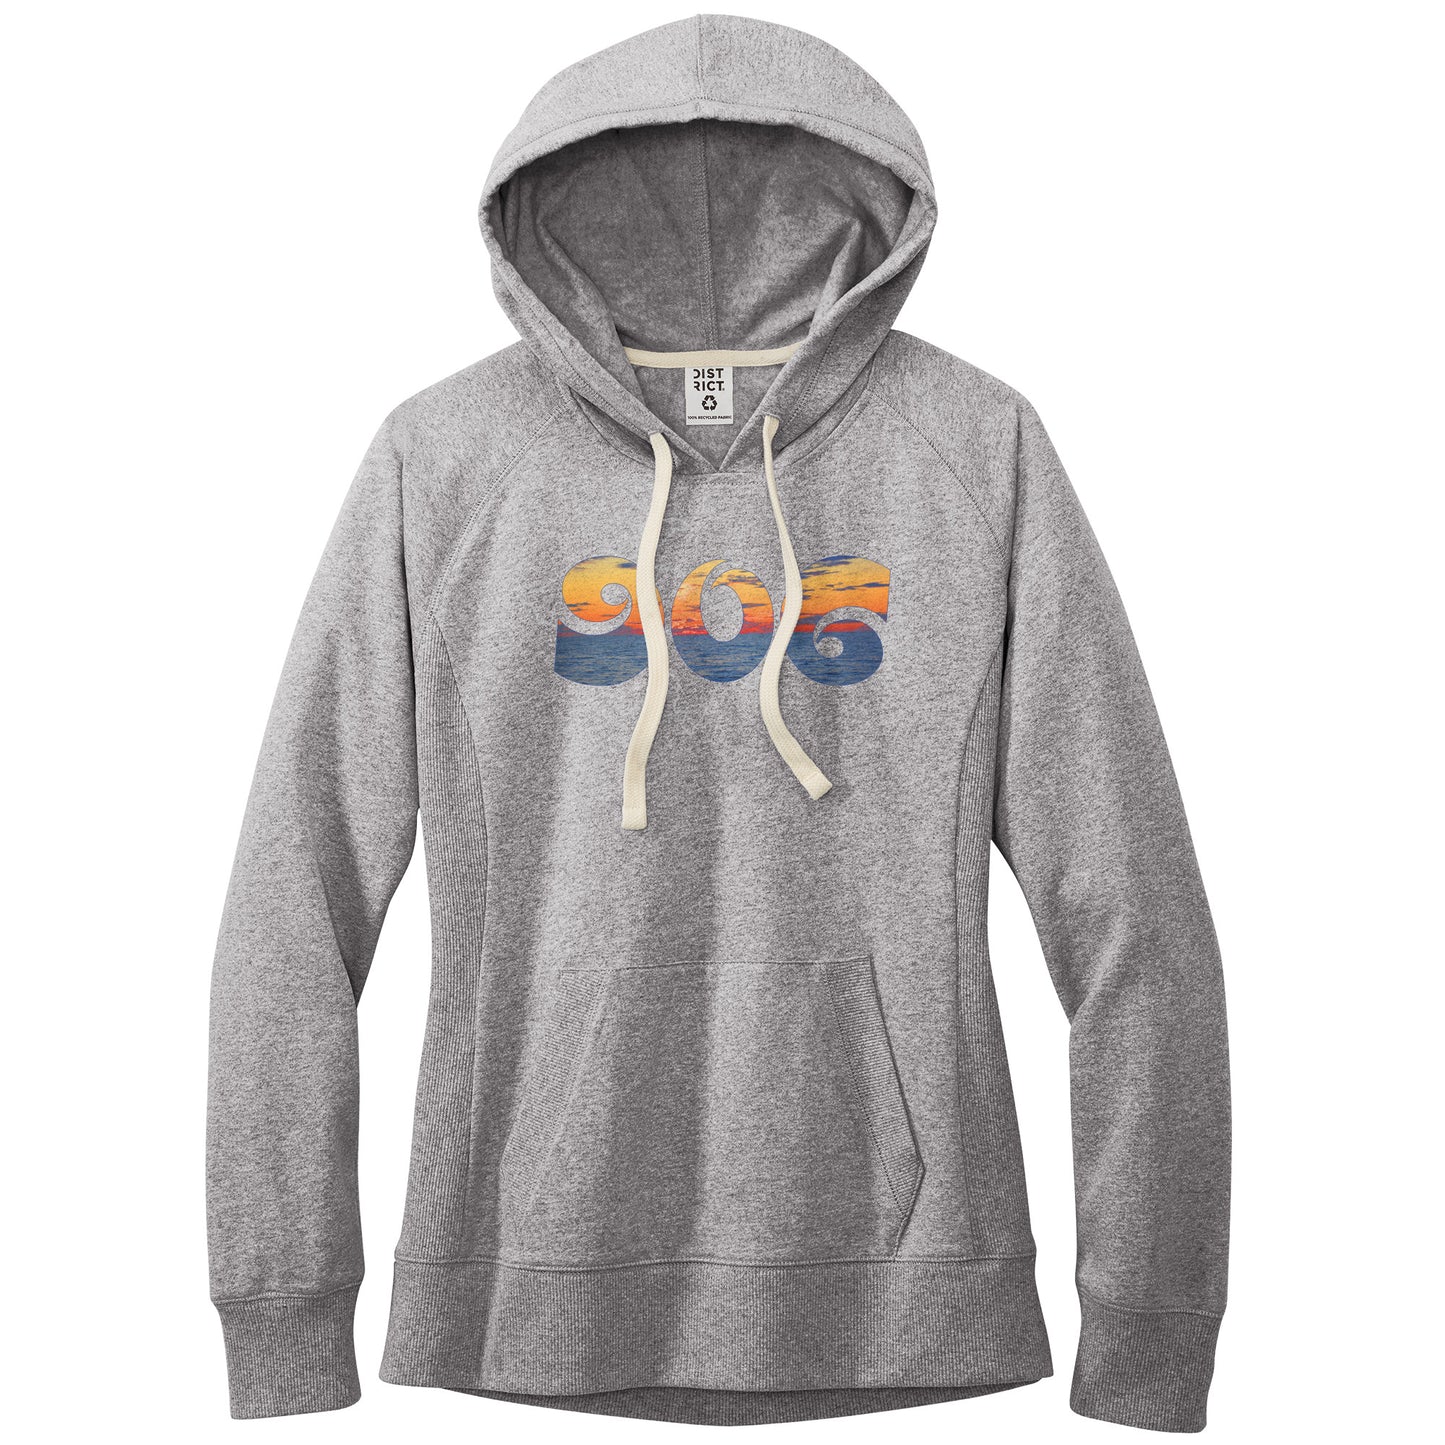 Yooper 906 Hoodie | Upper Michigan Gift | Upper Peninsula Hooded Sweatshirt